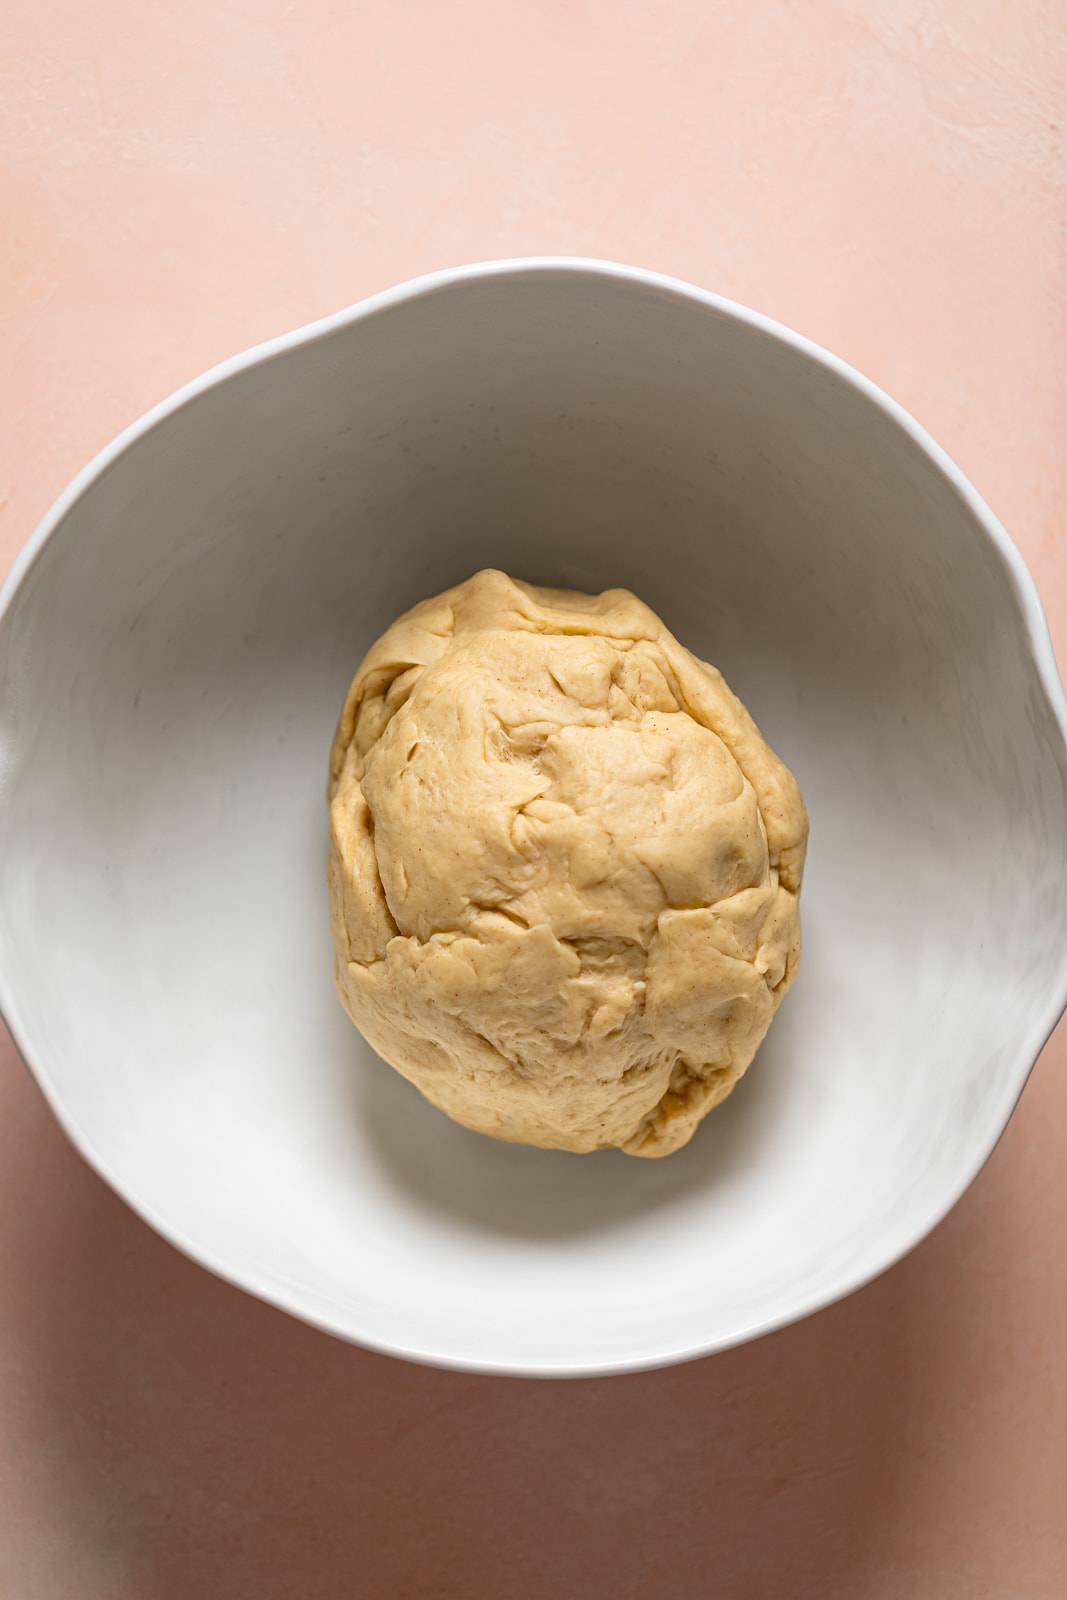 Ball of cinnamon roll dough in a bowl.